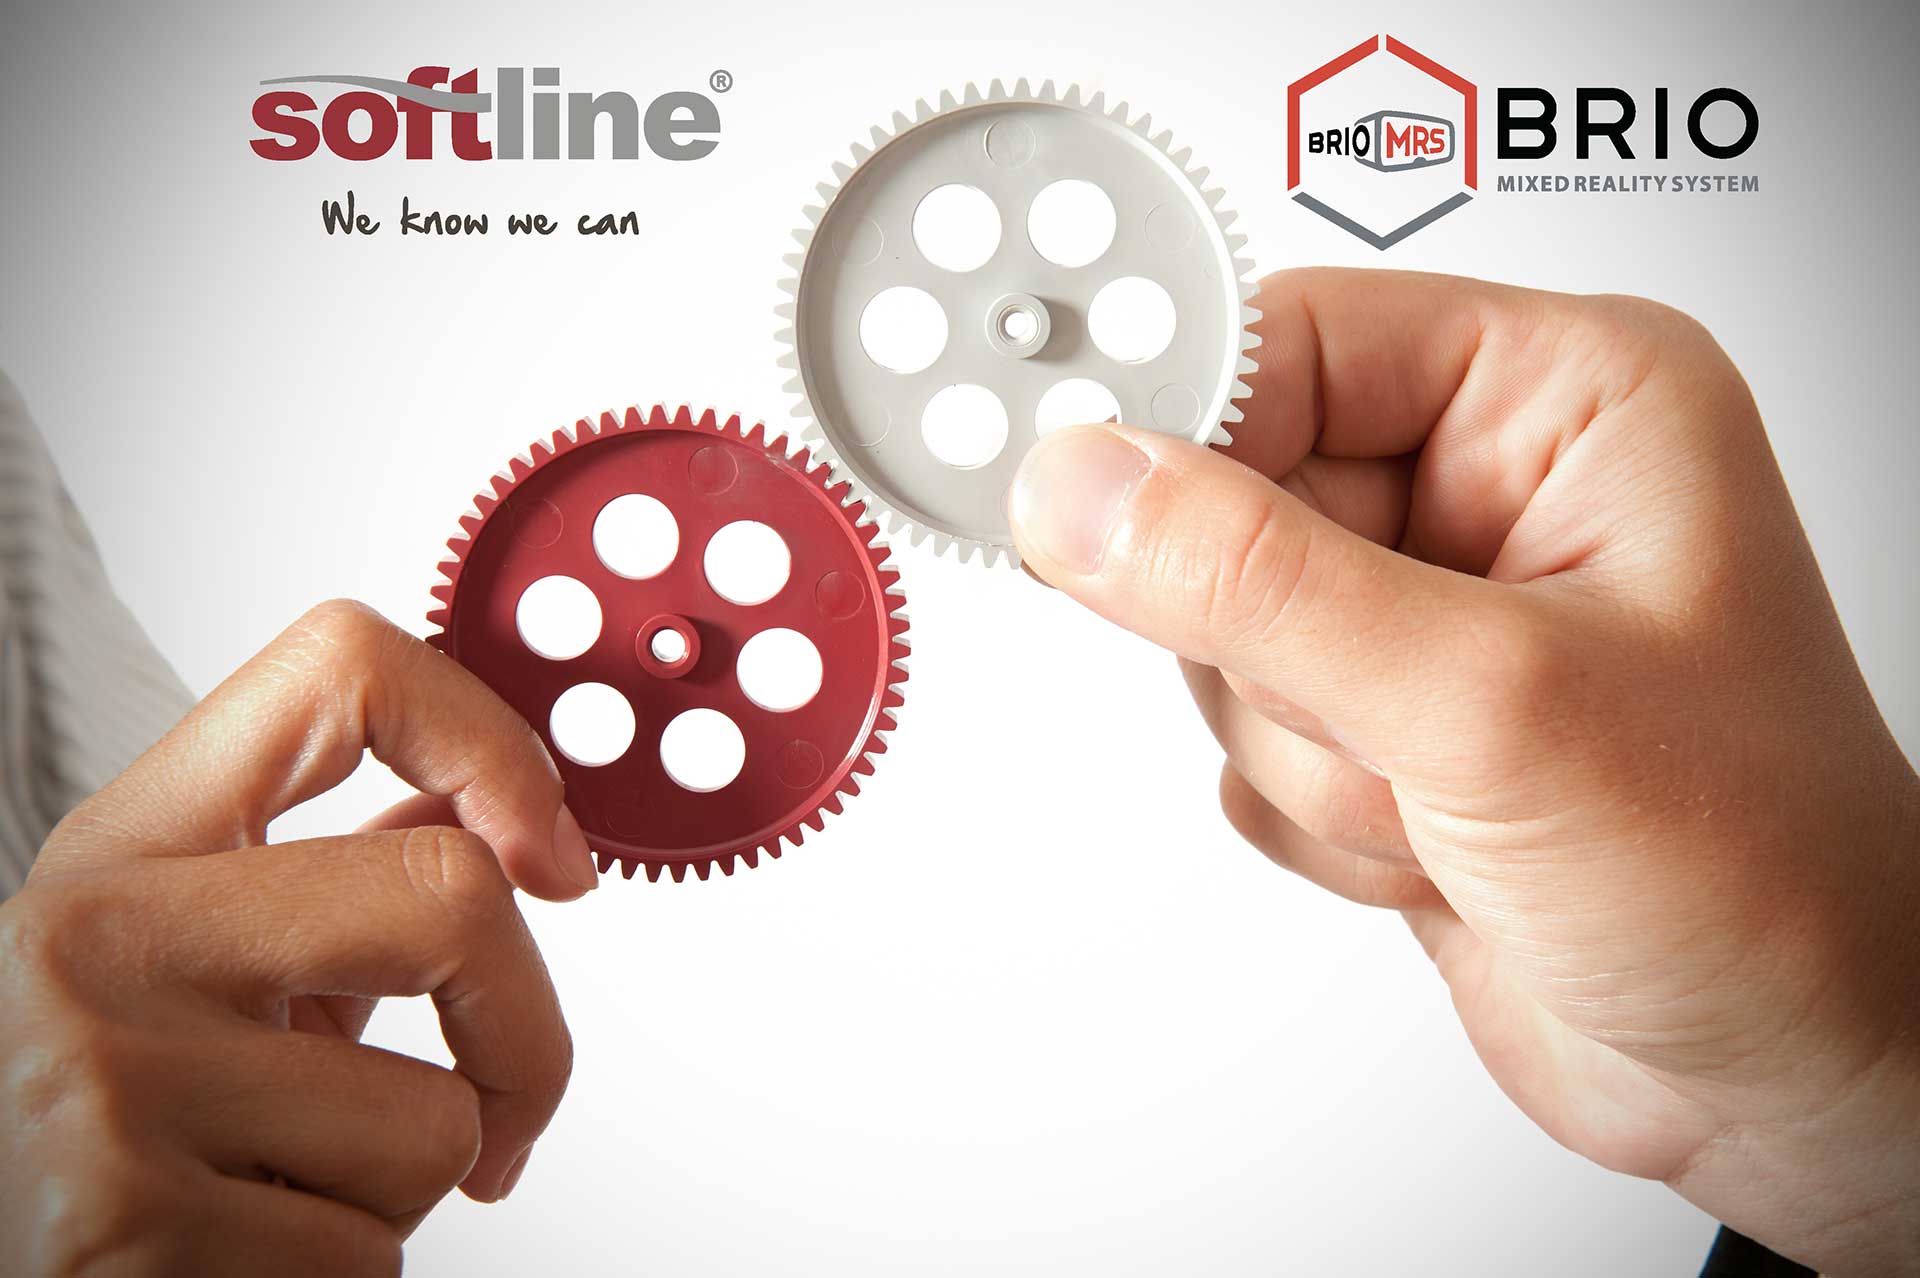 BRIO MRS и Softline стали партнерами